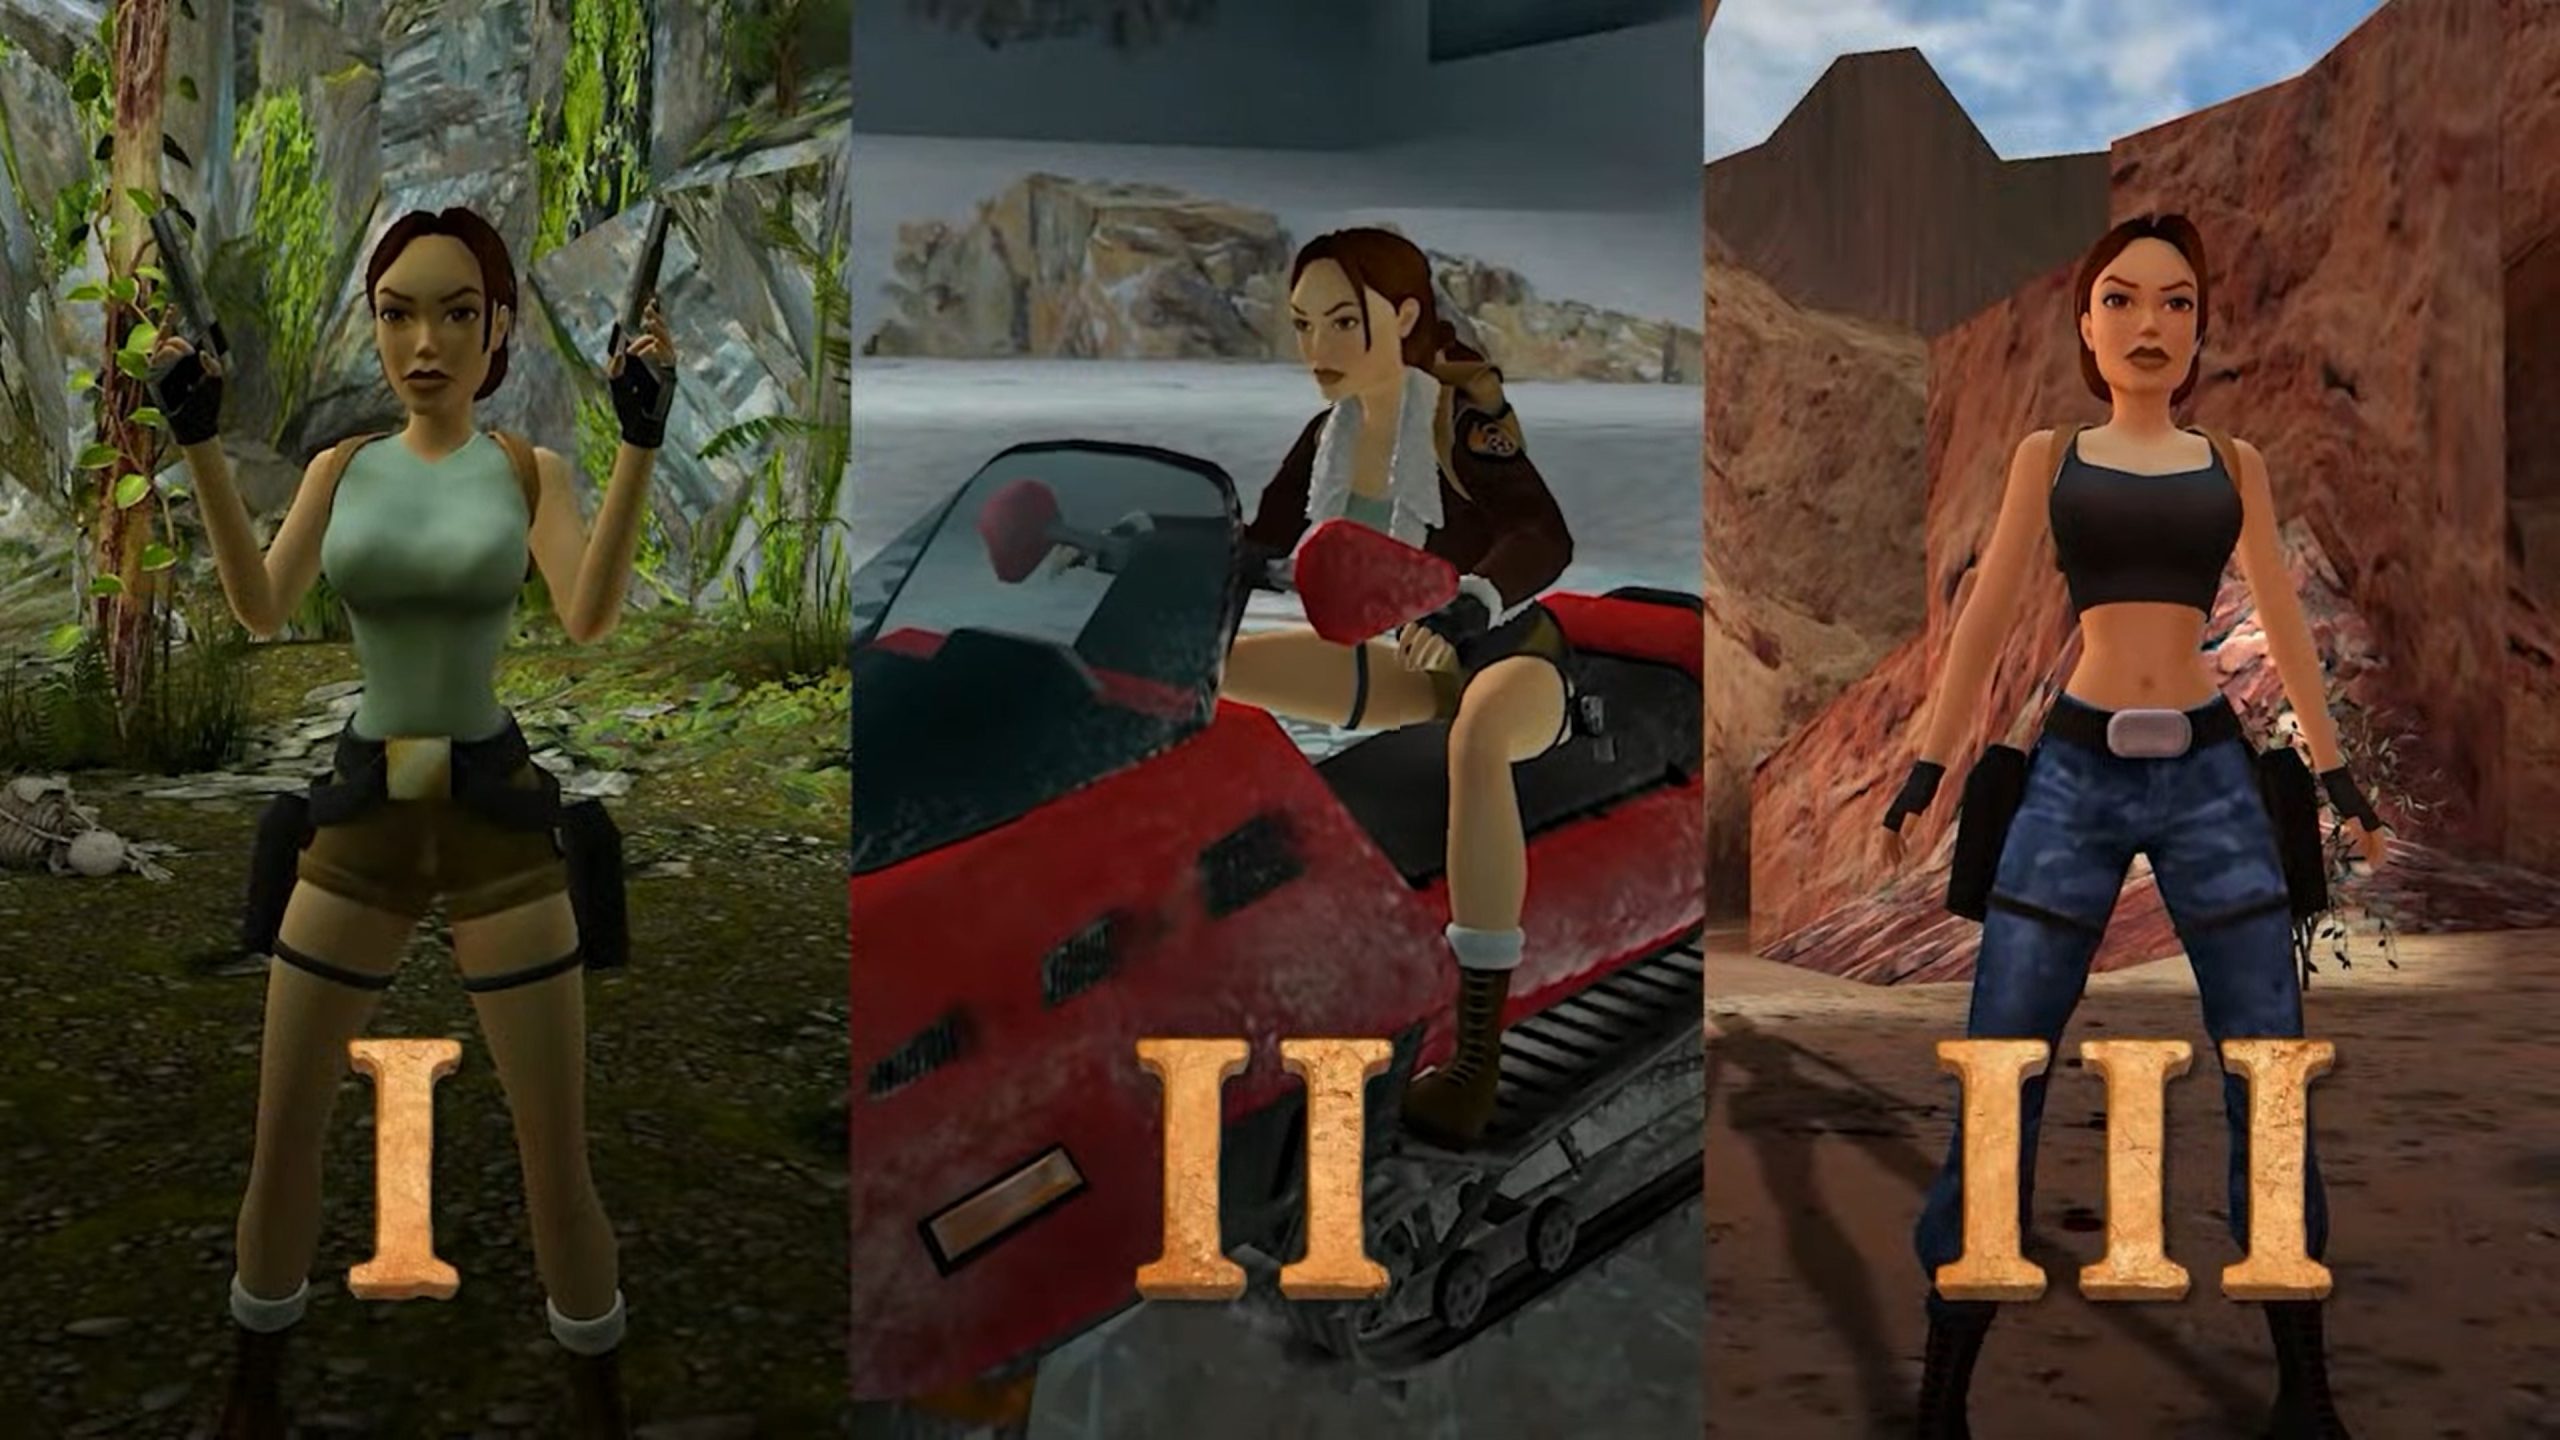 Netflix Releases Teaser For Tomb Raider: The Legend Of Lara Croft